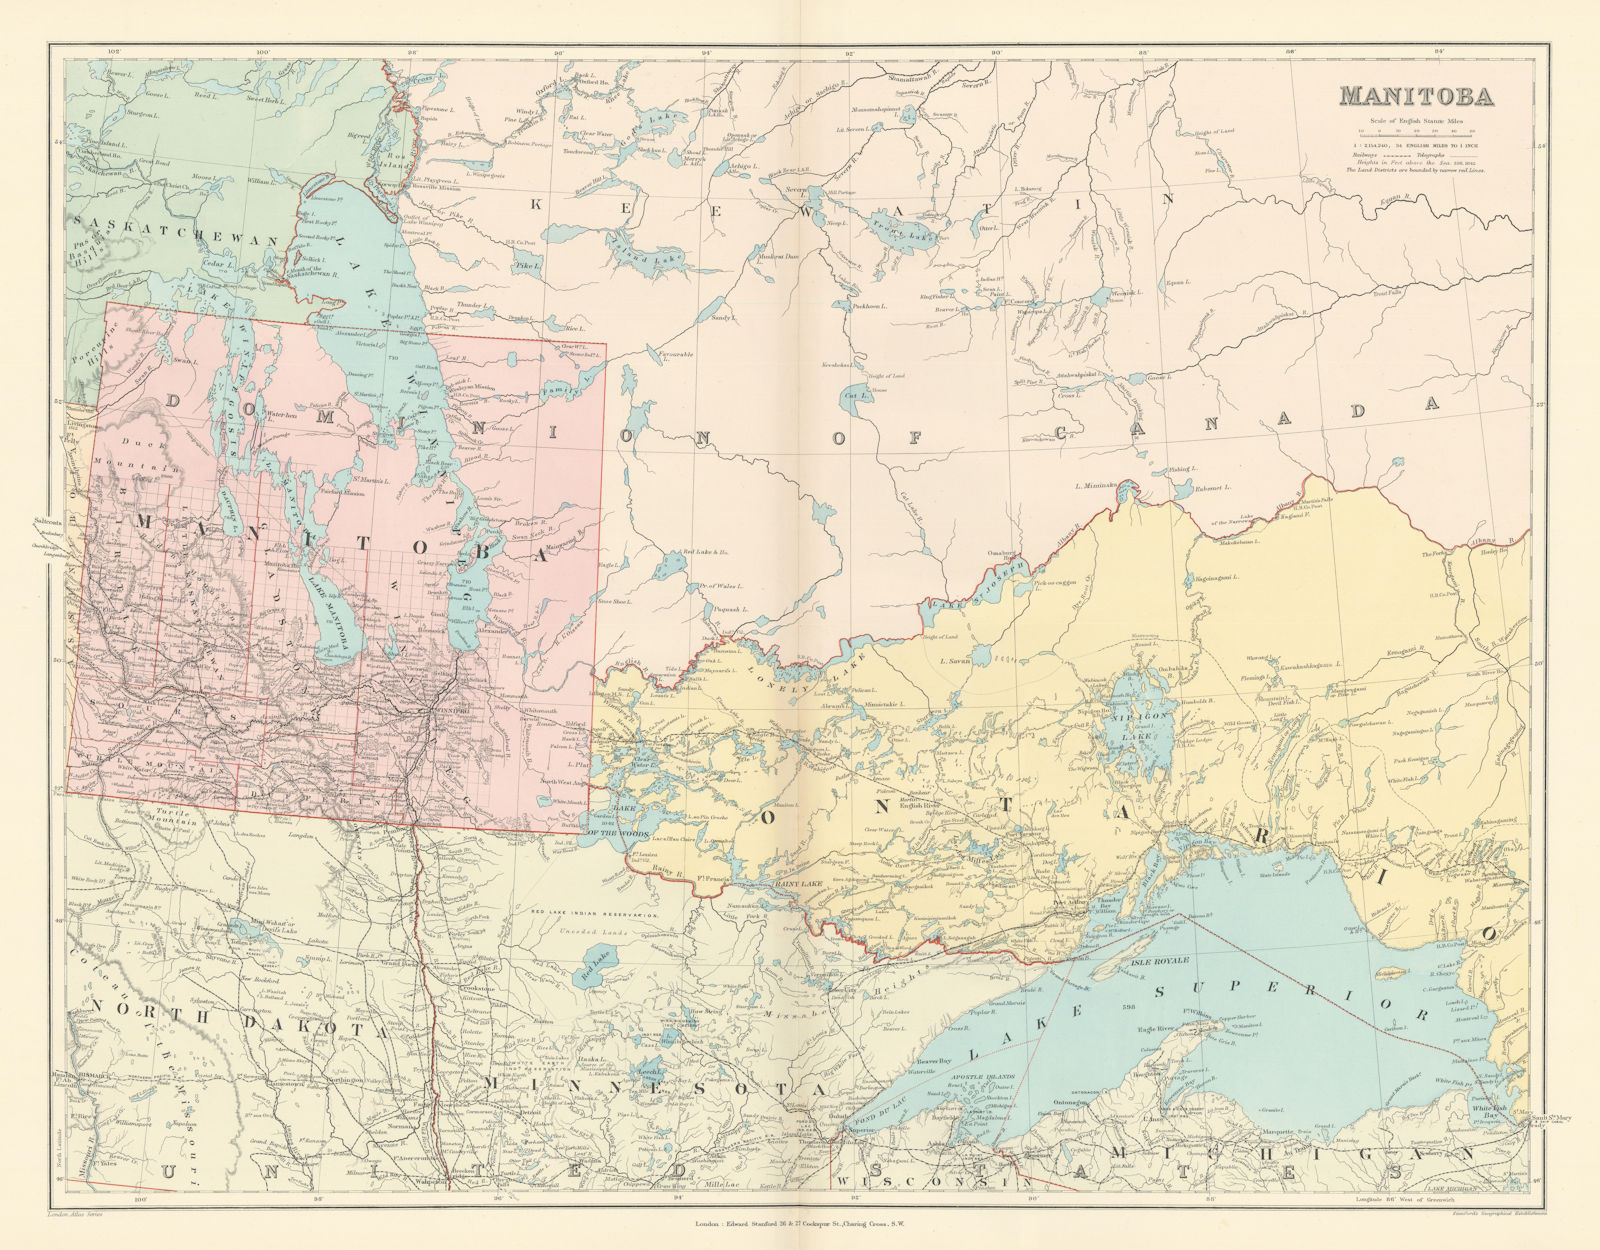 Associate Product Manitoba. West Ontario, Lake Superior & Winnipeg. Canada. STANFORD 1896 map